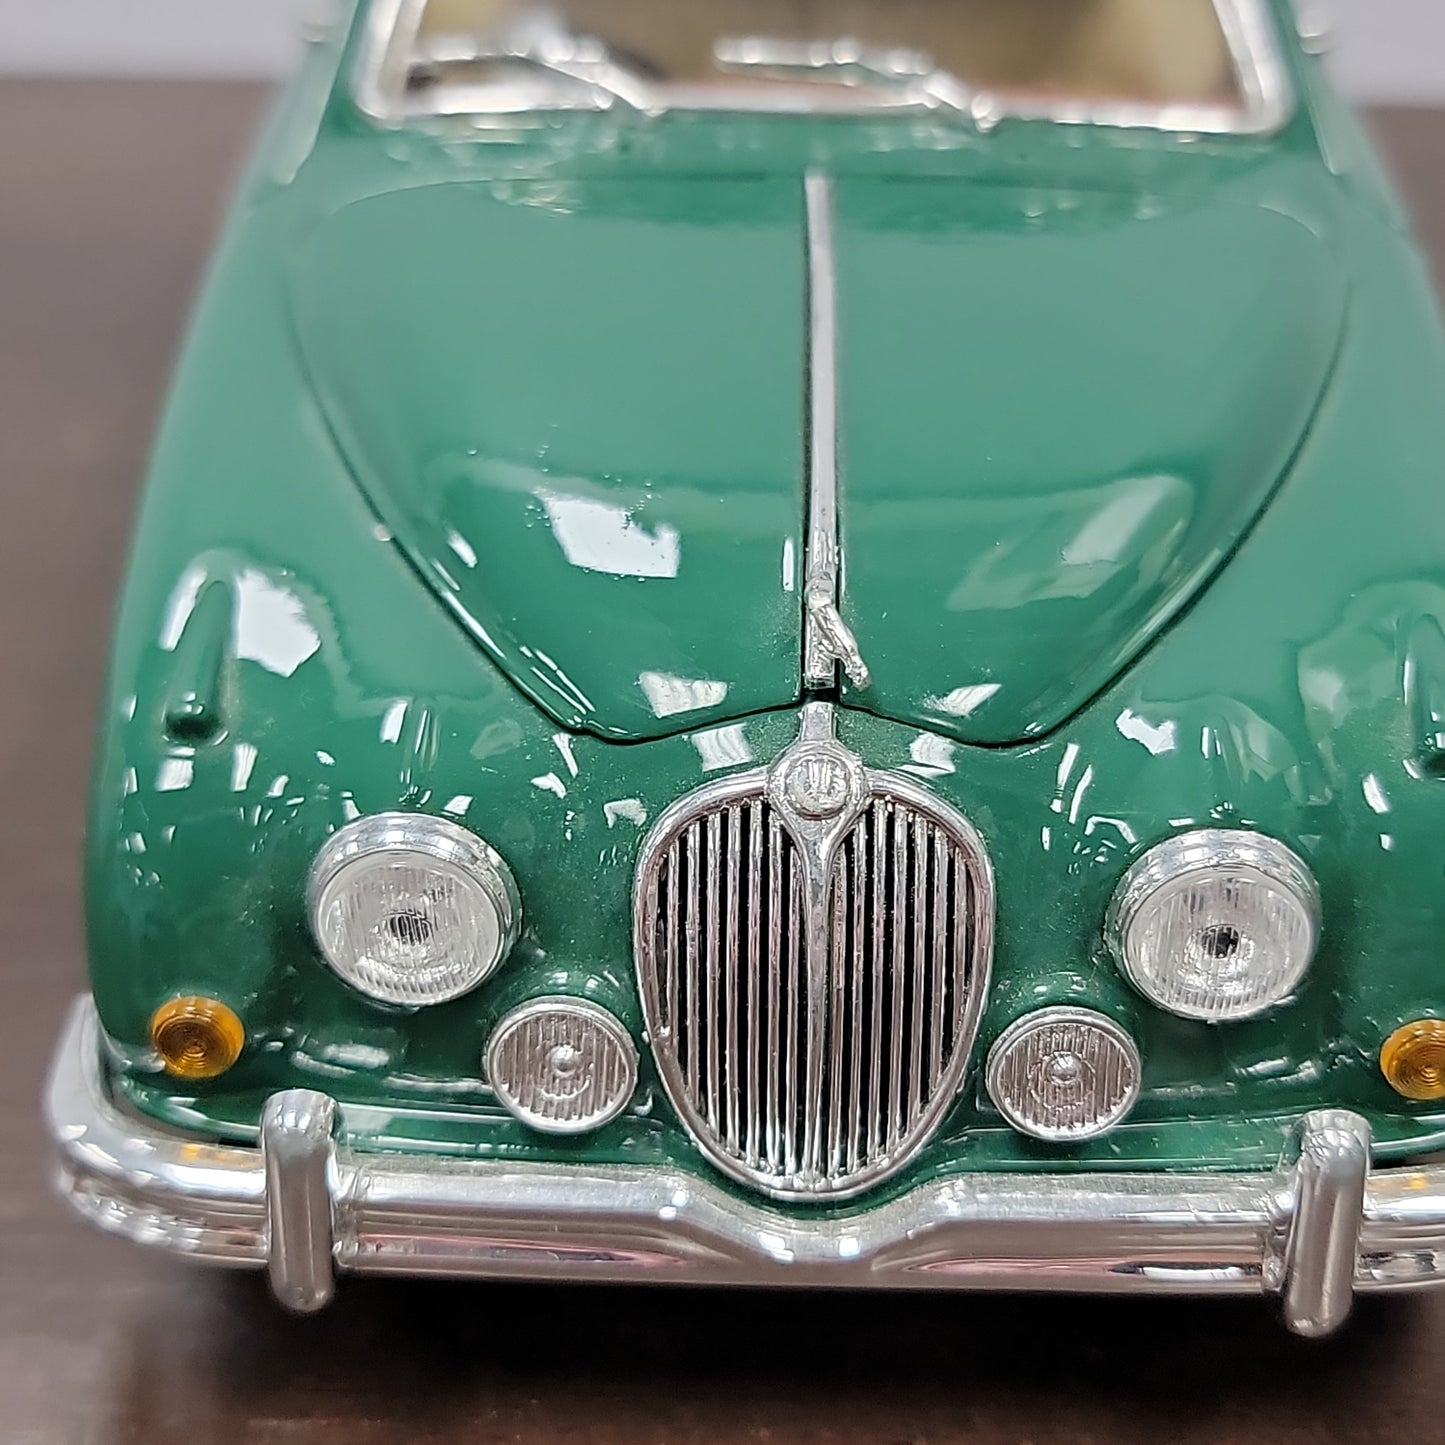 Maisto Jaguar Mark II (1959) Diecast 1/18 Scale